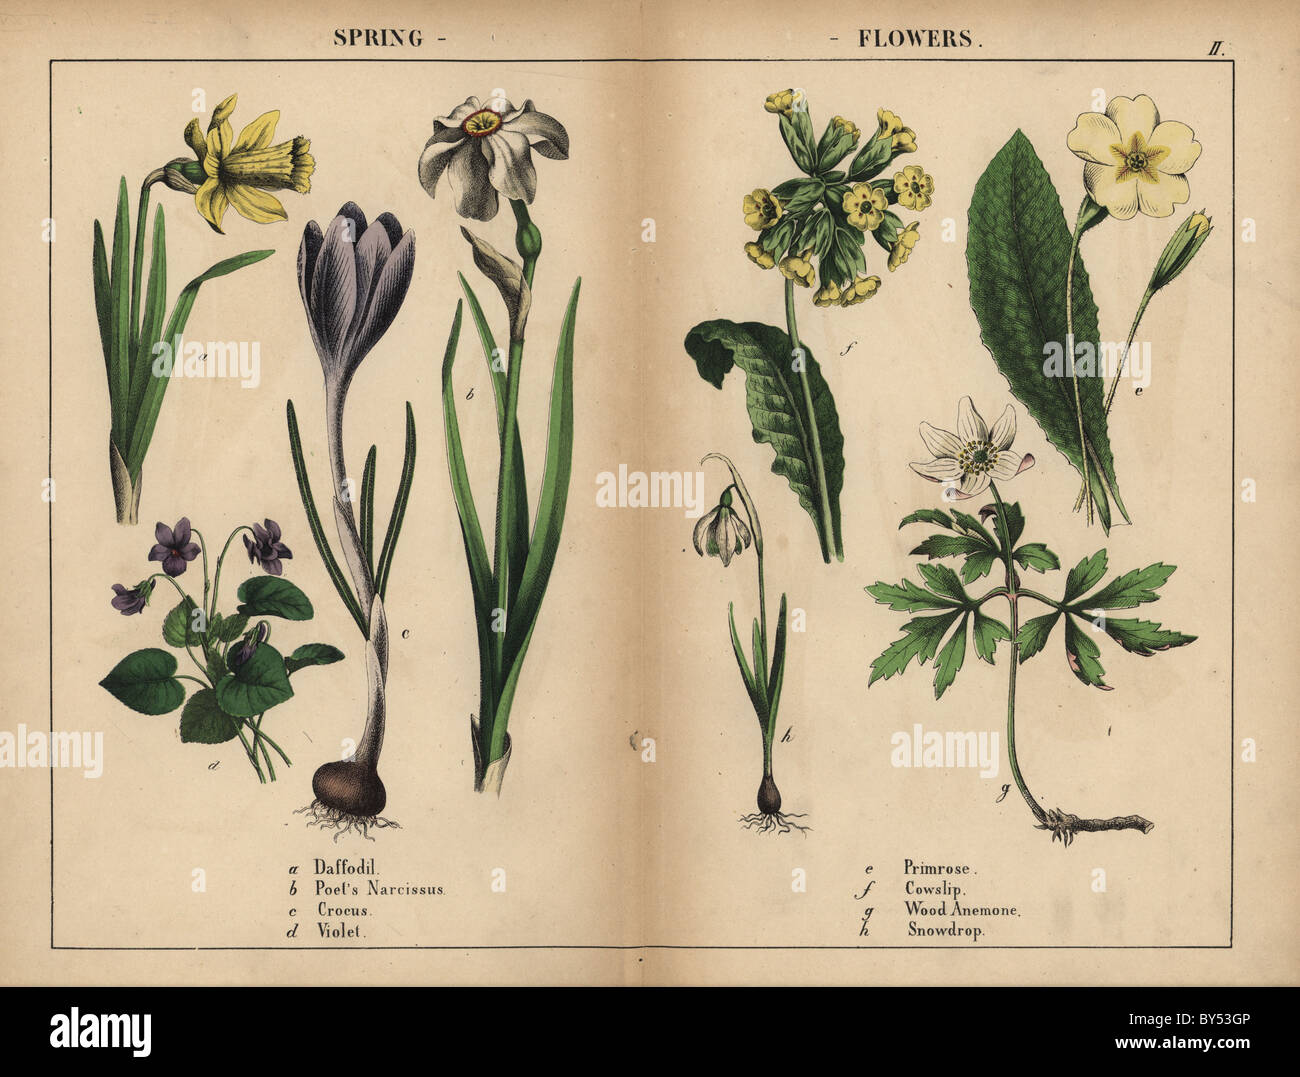 Yellow daffodil, white poet's narcissus, purple crocus, purple violet, yellow primrose, yellow cowslip, white wood anemone, and Stock Photo